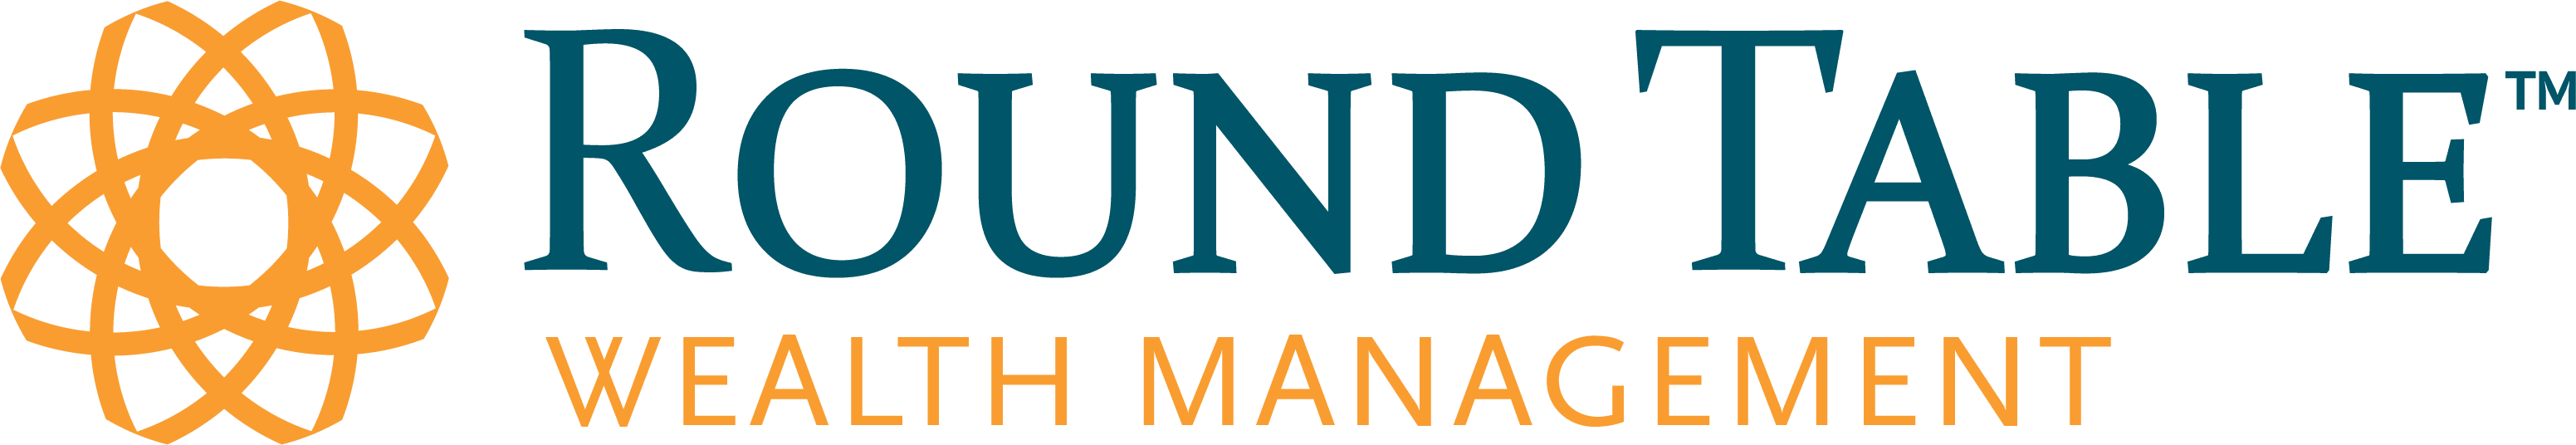 Round Table Wealth Management logo